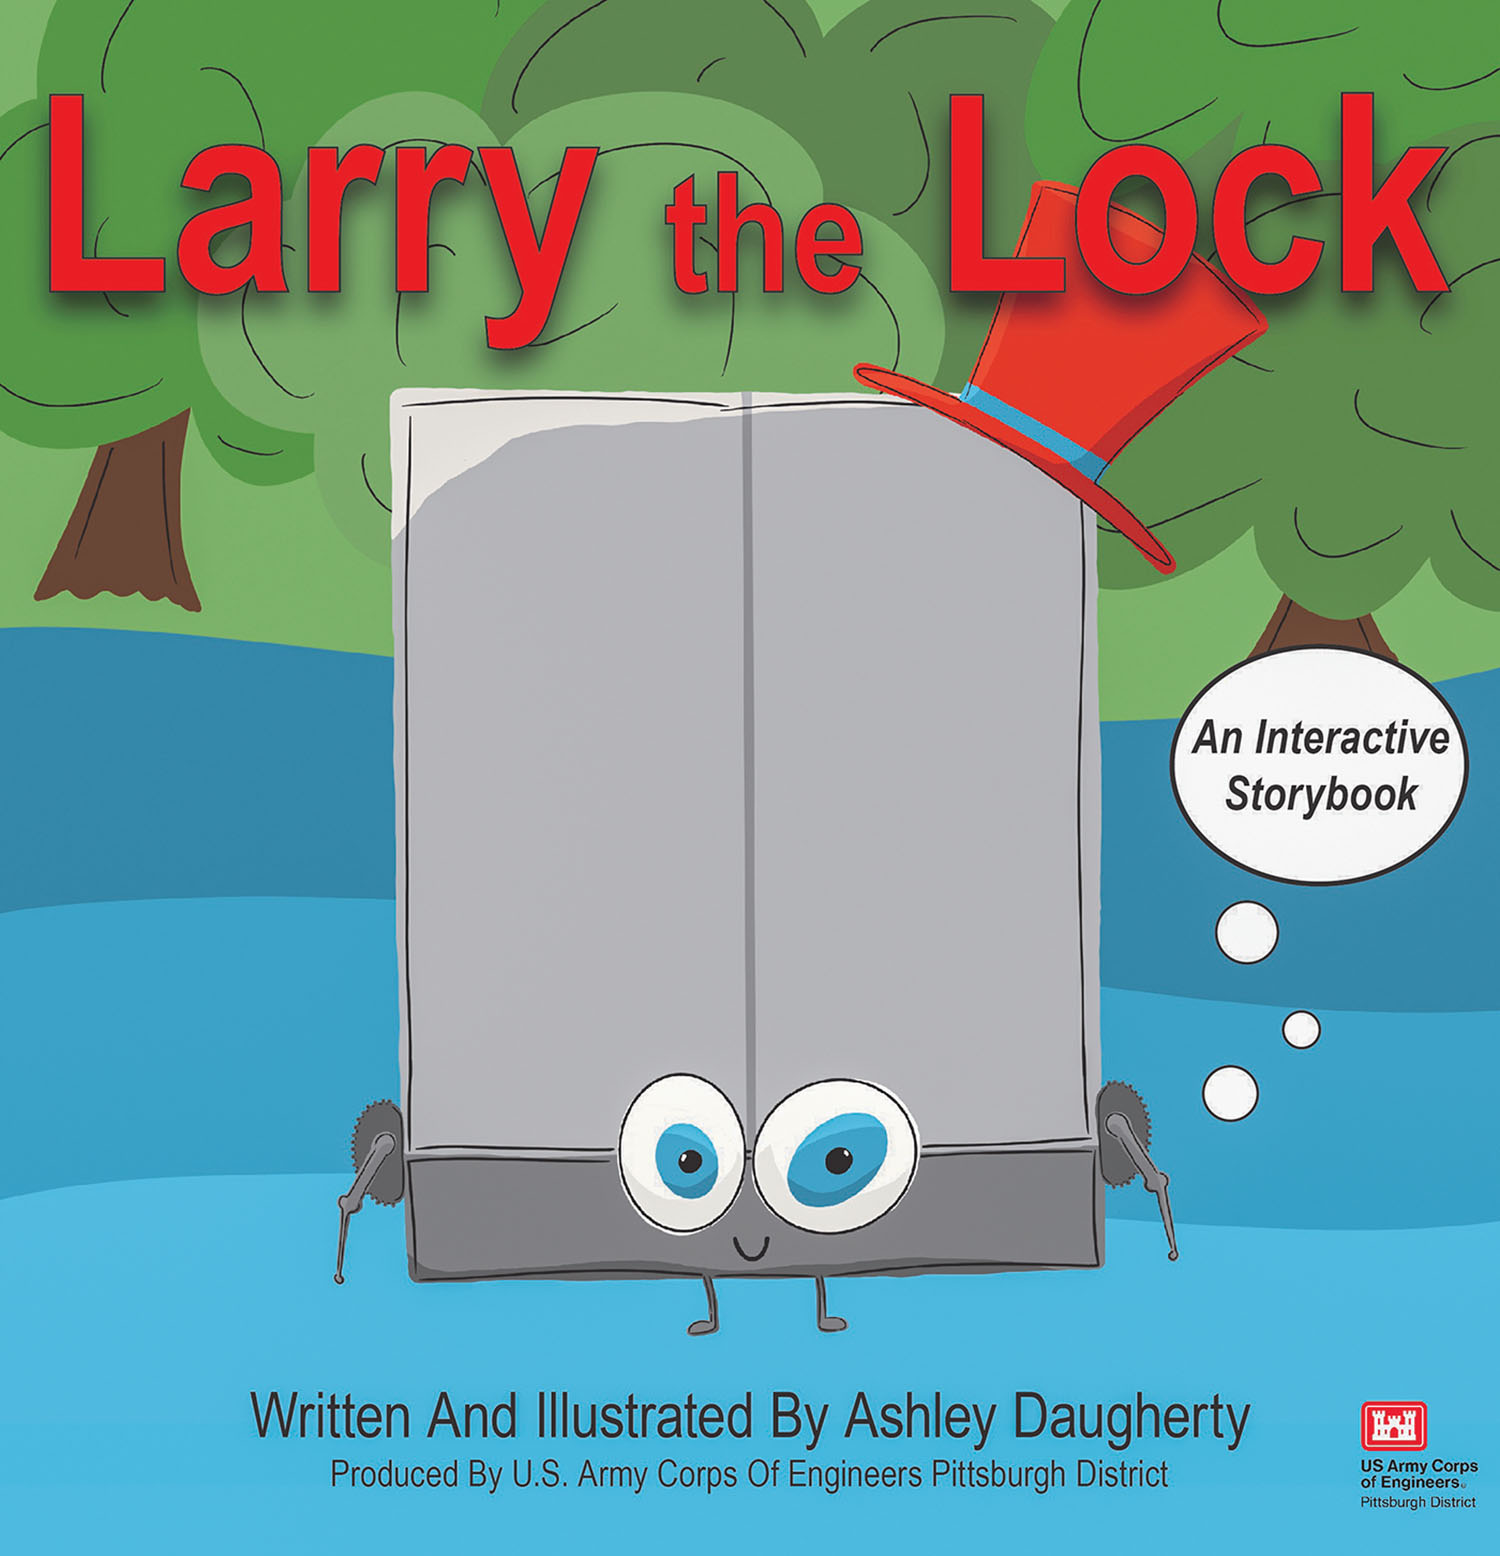 Storybook Tells About Lock Through Cartoon Figure 